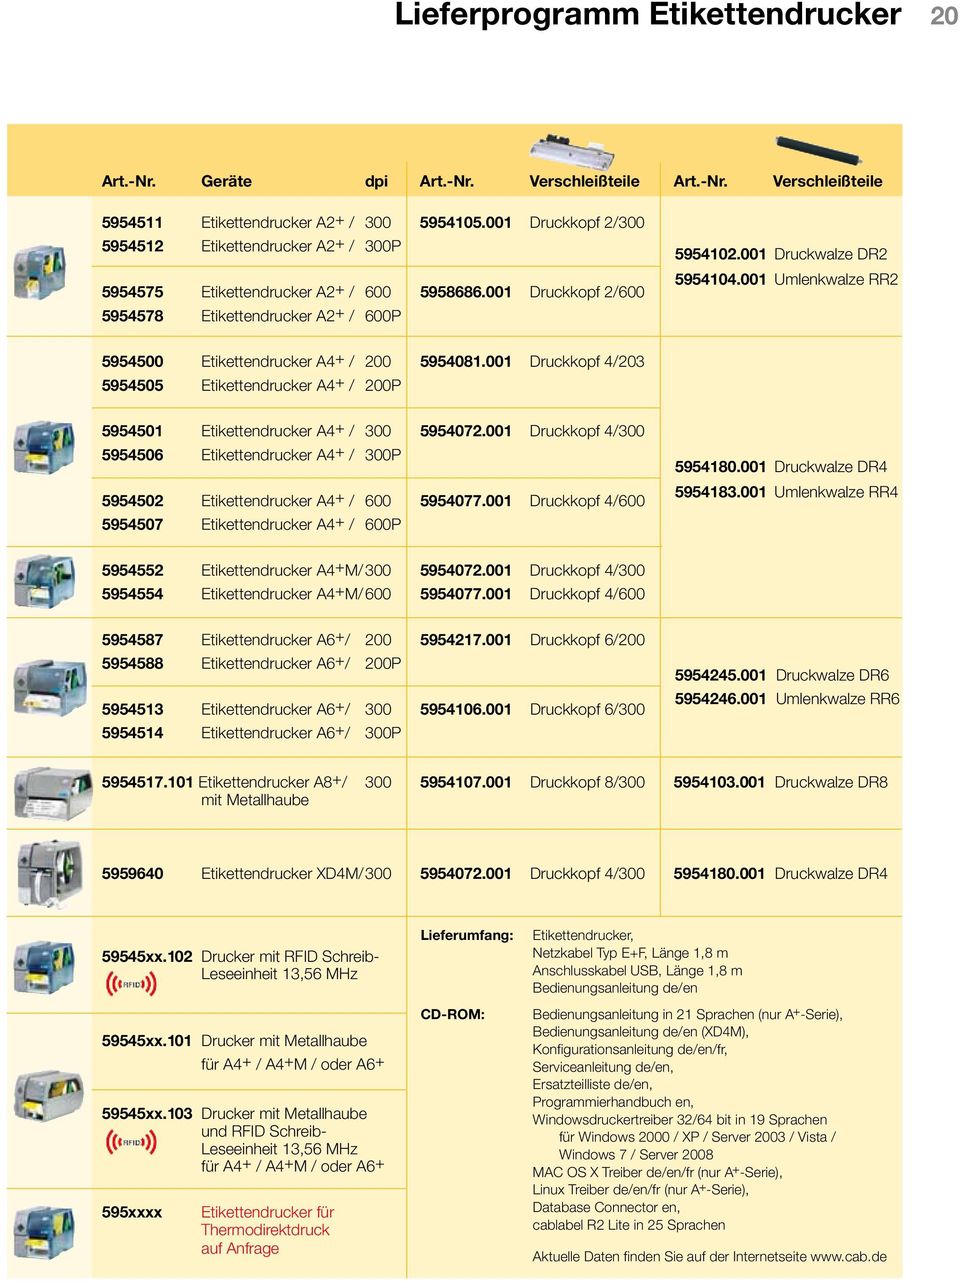 001 Umlenkwalze RR2 5954500 Etikettendrucker A4+ / 200 5954081.001 Druckkopf 4/203 5954505 Etikettendrucker A4+ / 200P 5954501 Etikettendrucker A4+ / 300 5954072.